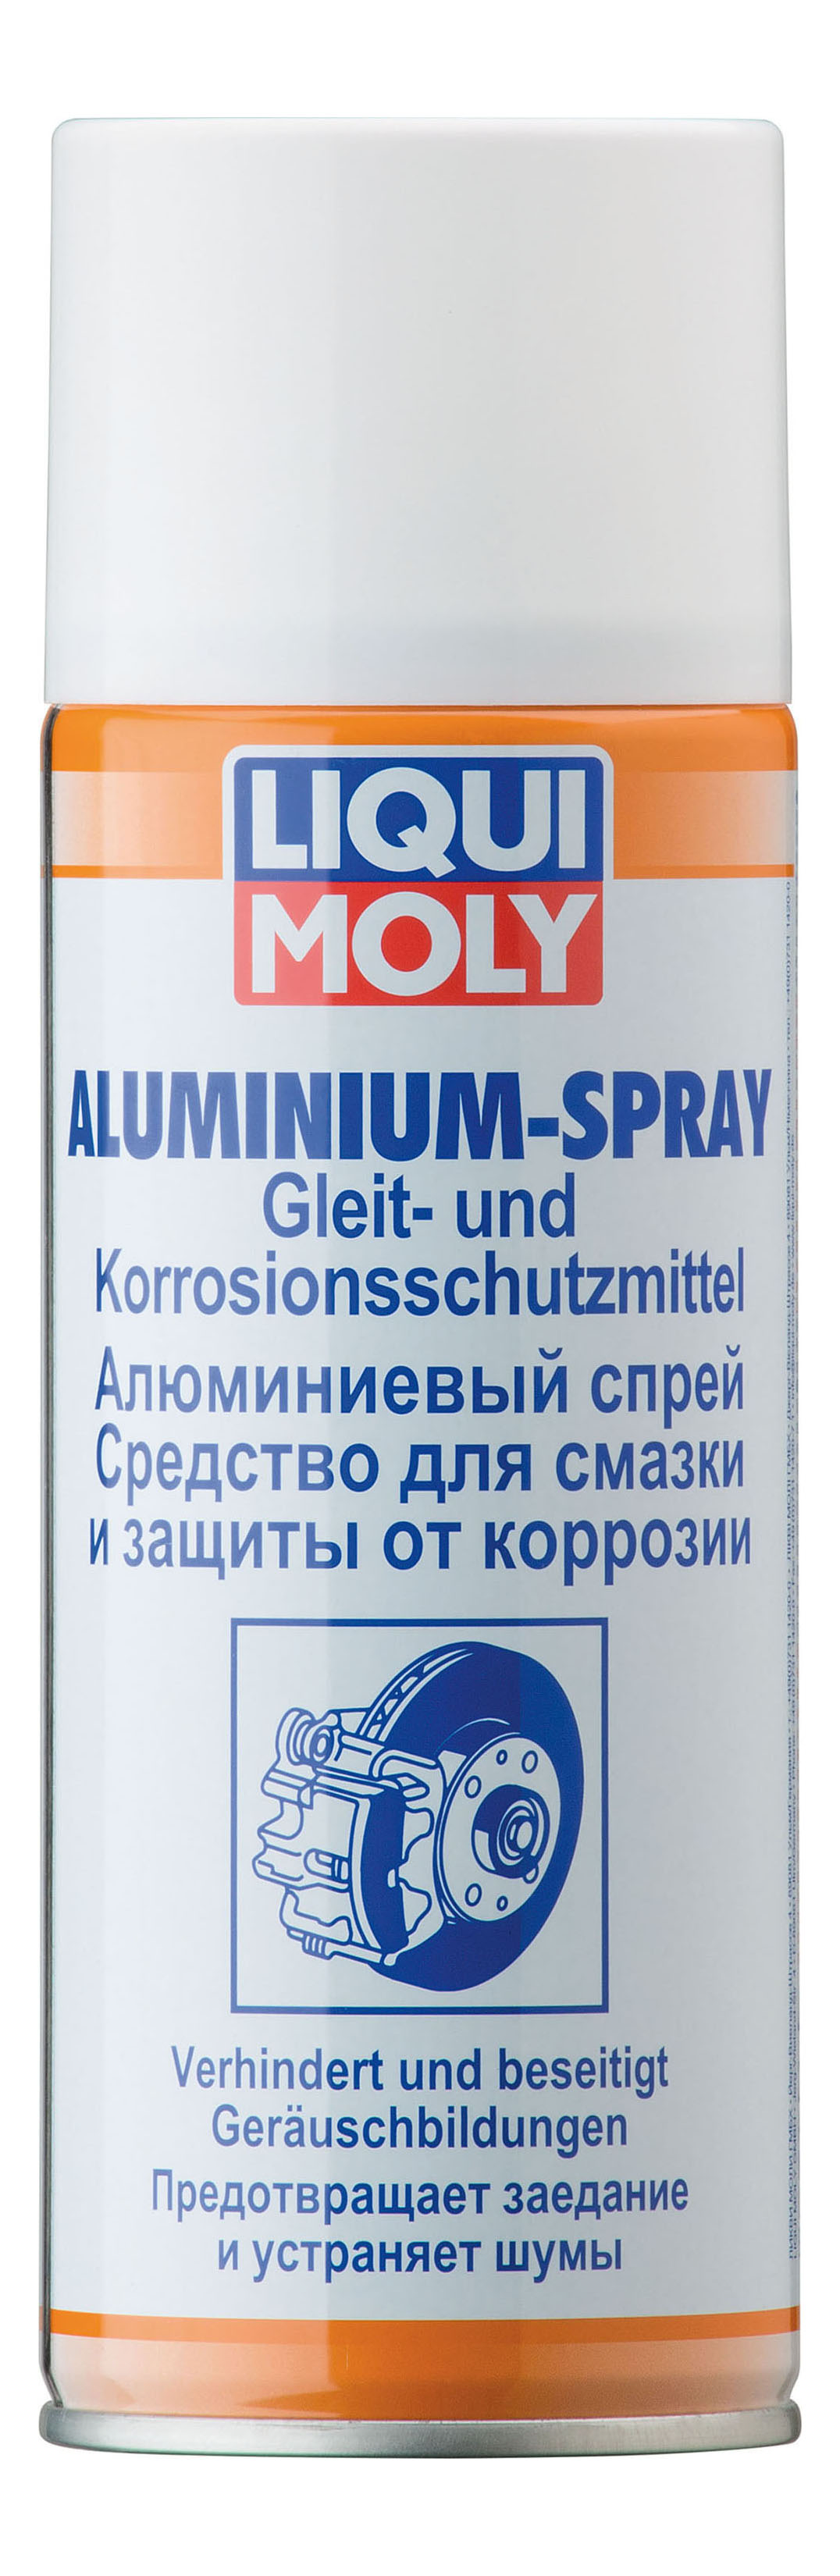 Liquimoly Aluminium-Spray 0.4L_Алюминевый Спрей  Liqui Moly 7533